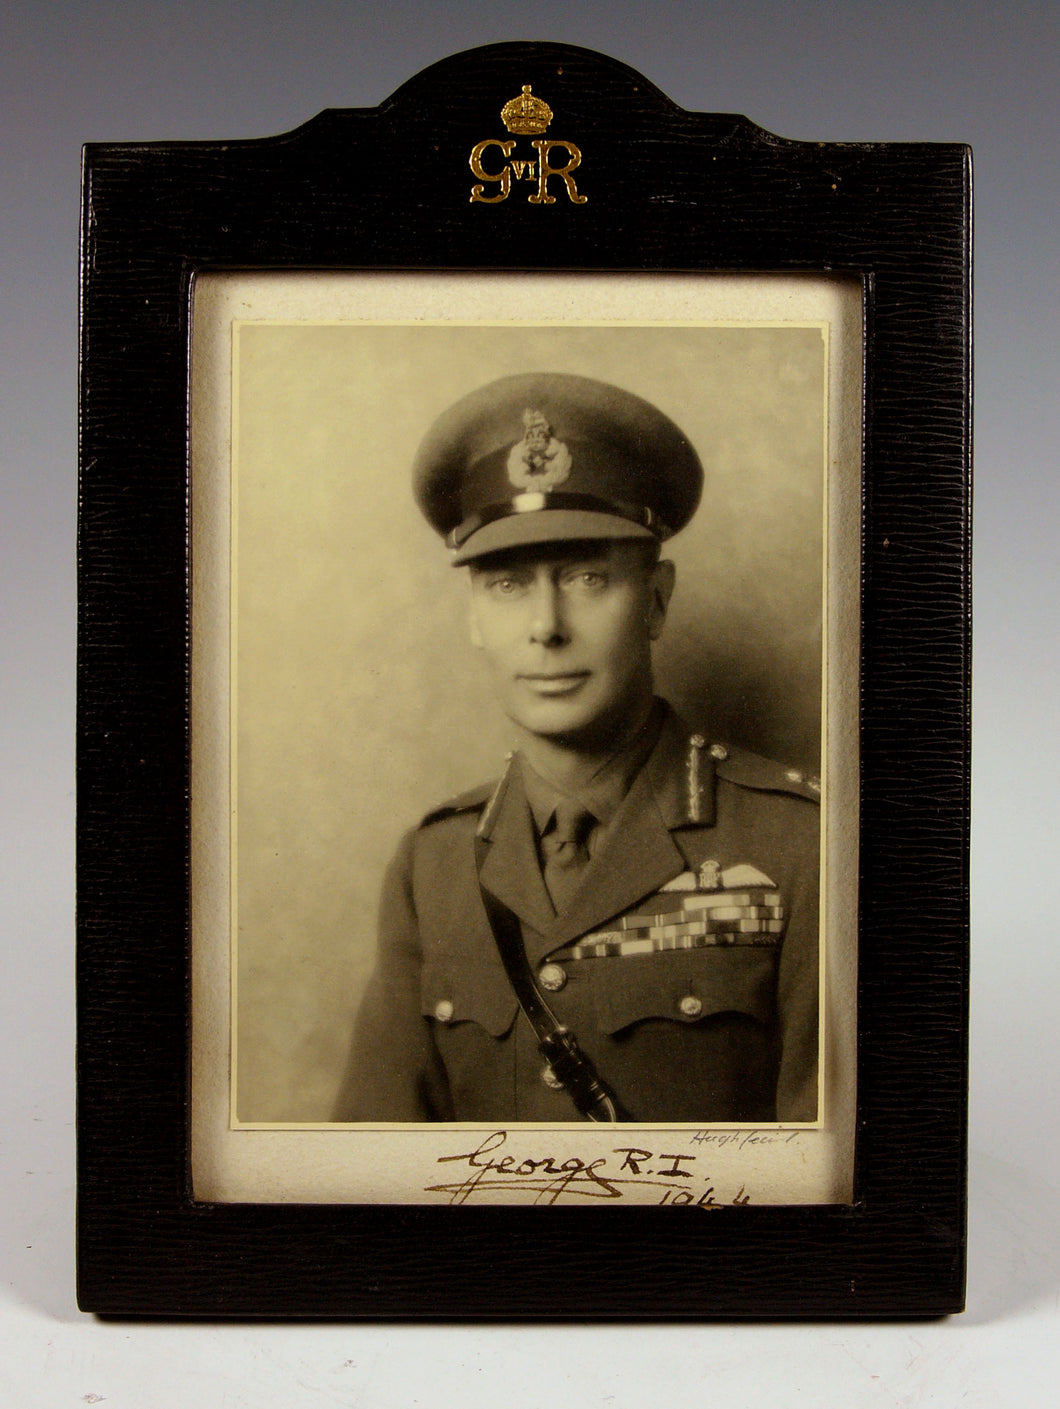 A Signed Royal Presentation Portrait of King George VI, dated 1944